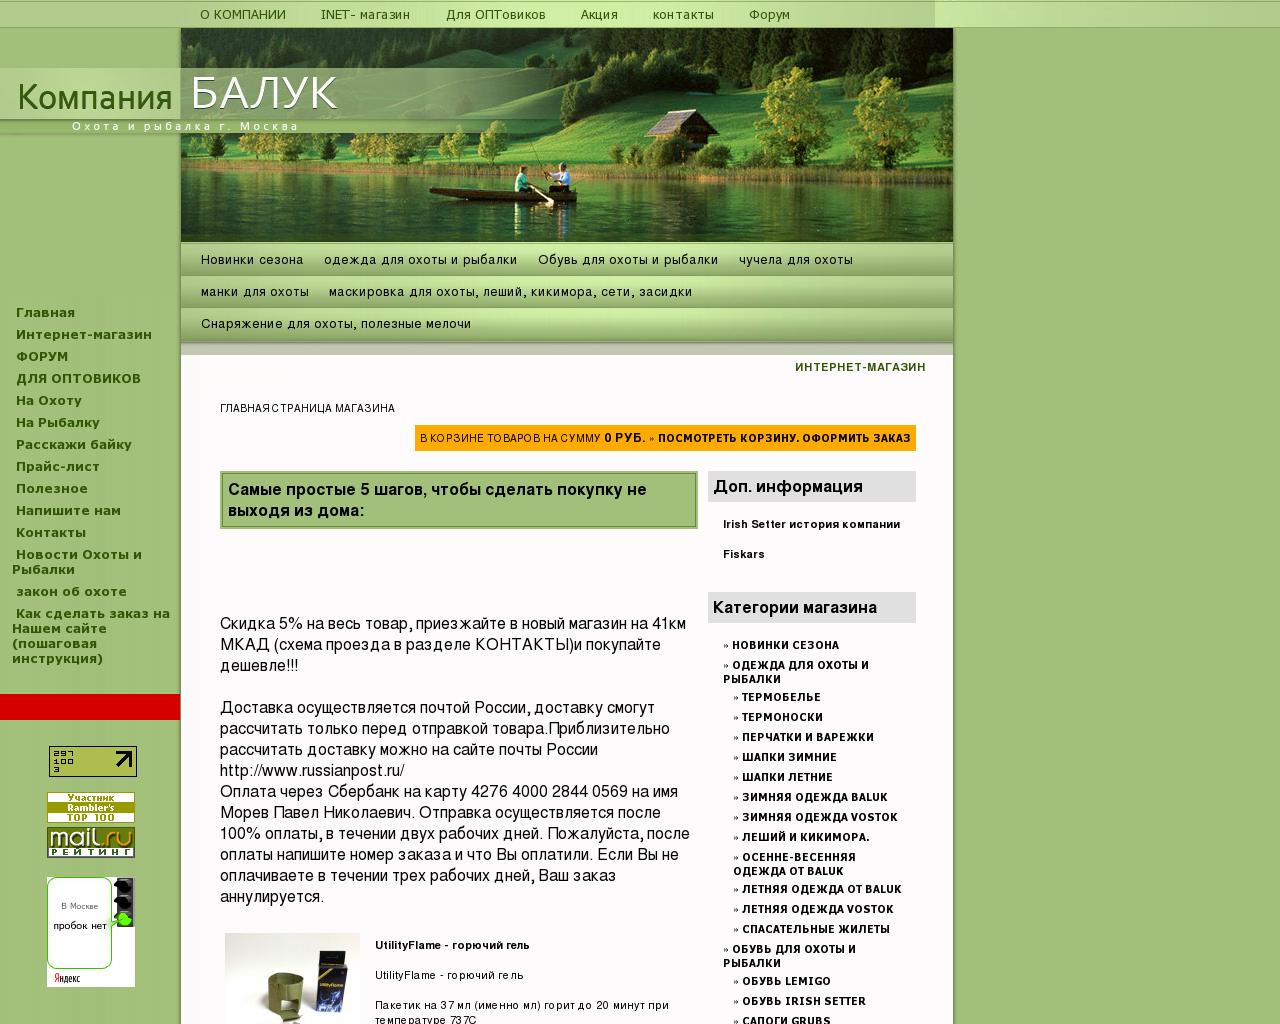 Изображение сайта baluk.ru в разрешении 1280x1024